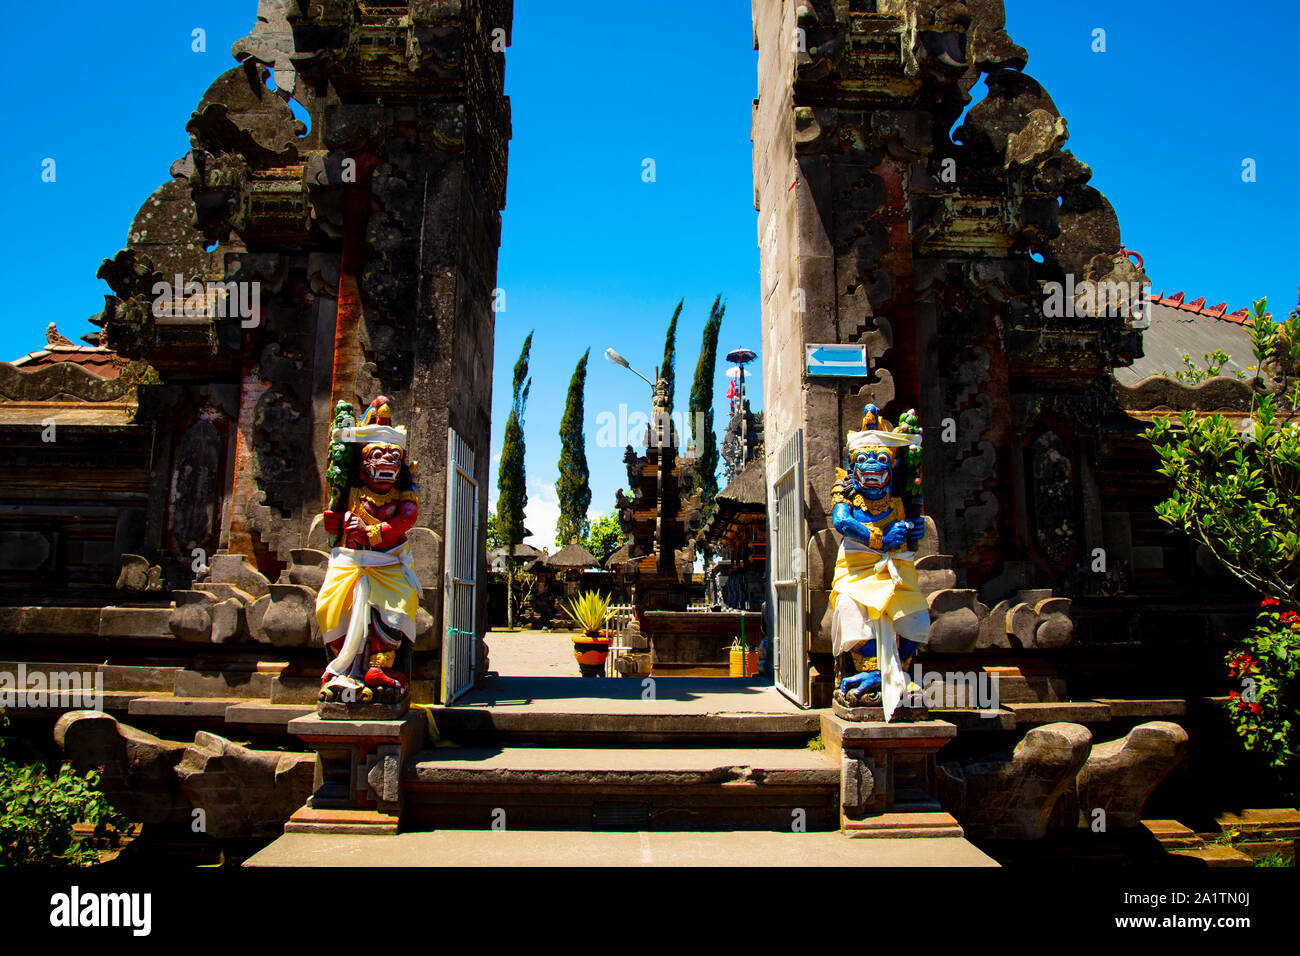 Ulun Danu Batur Temple - Bali - Indonesia Stock Photo